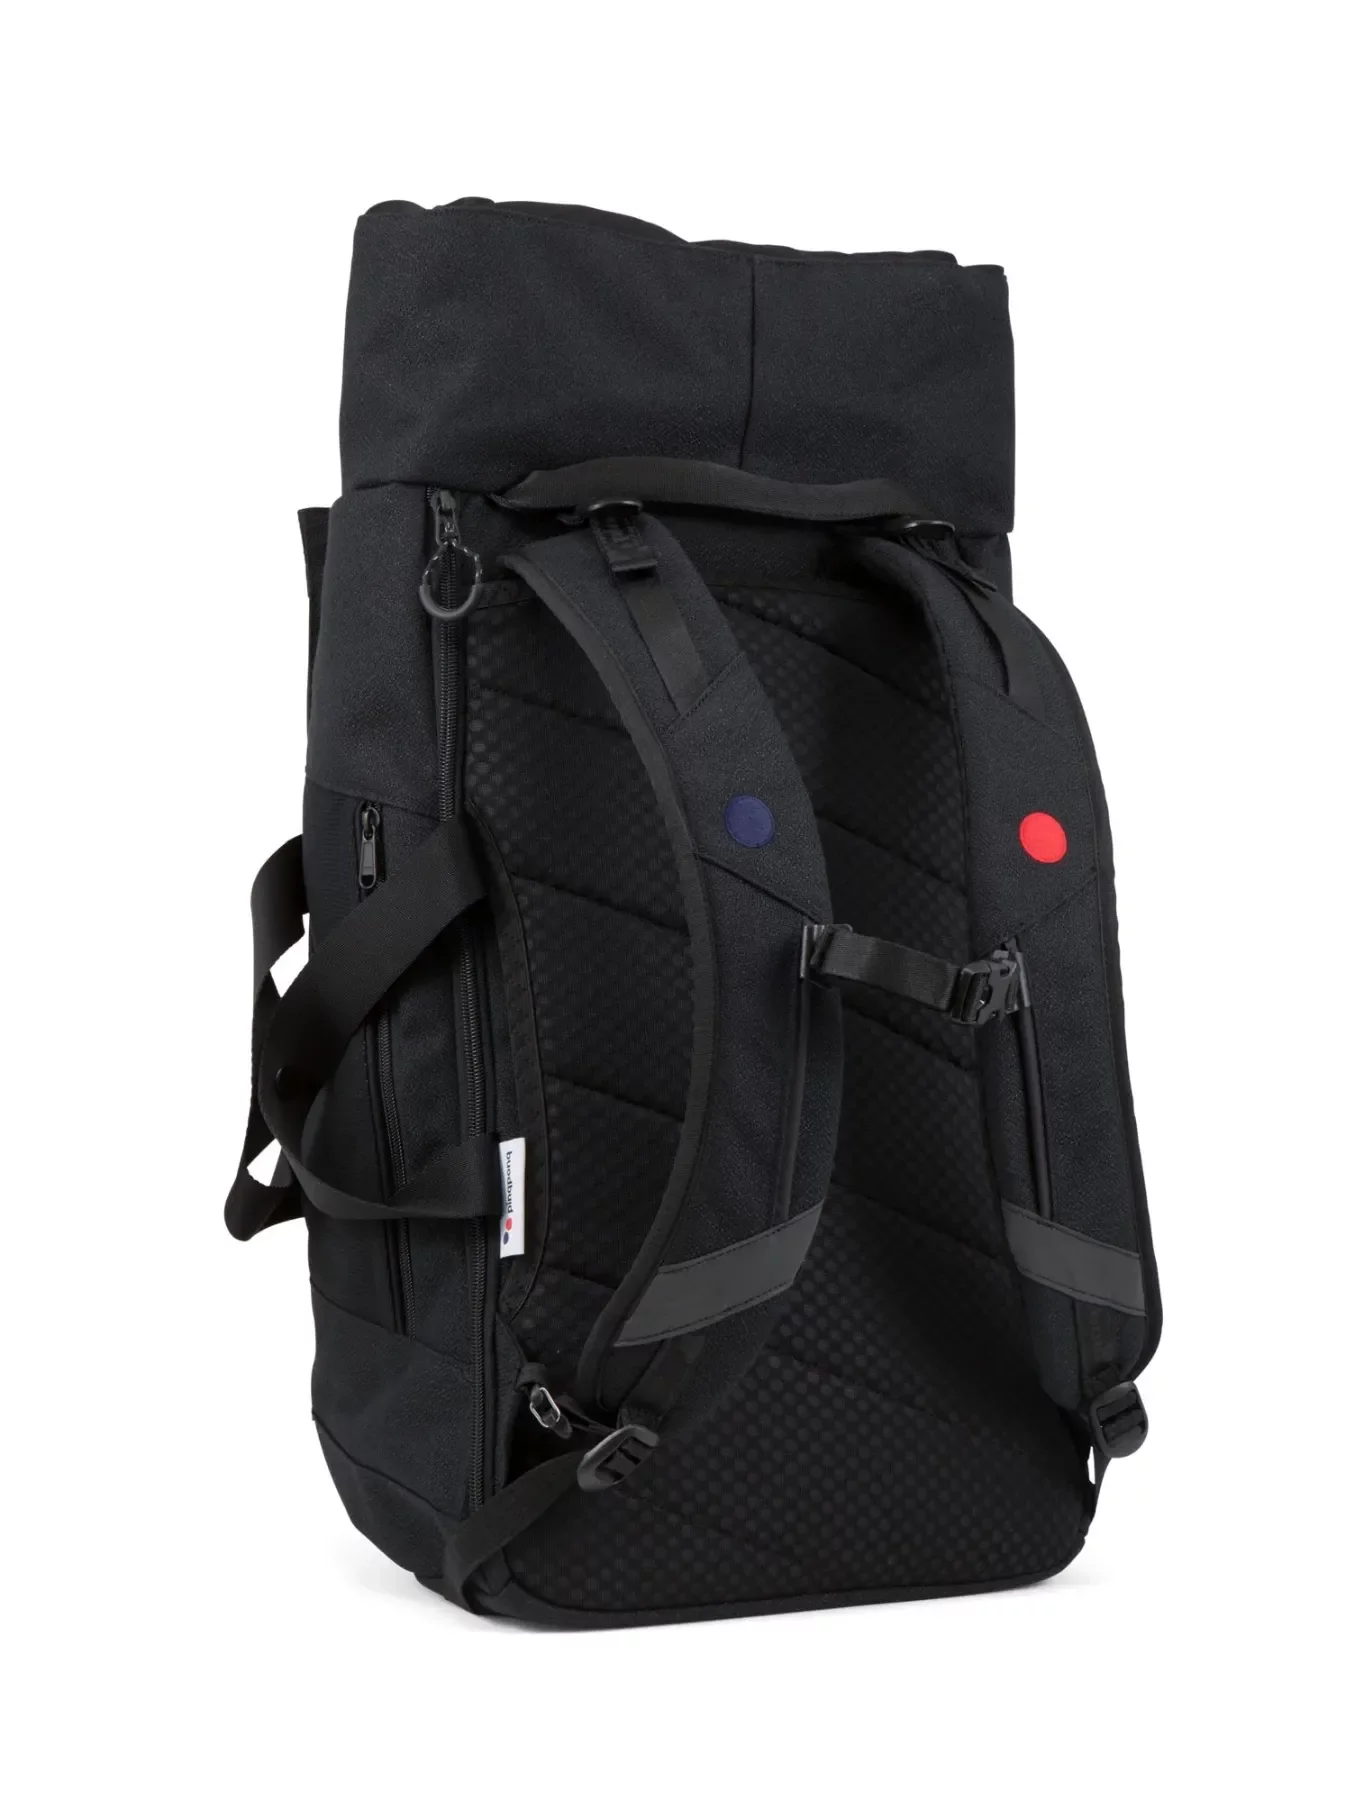 pinqponq Backpack BLOK large - Licorice Black 5